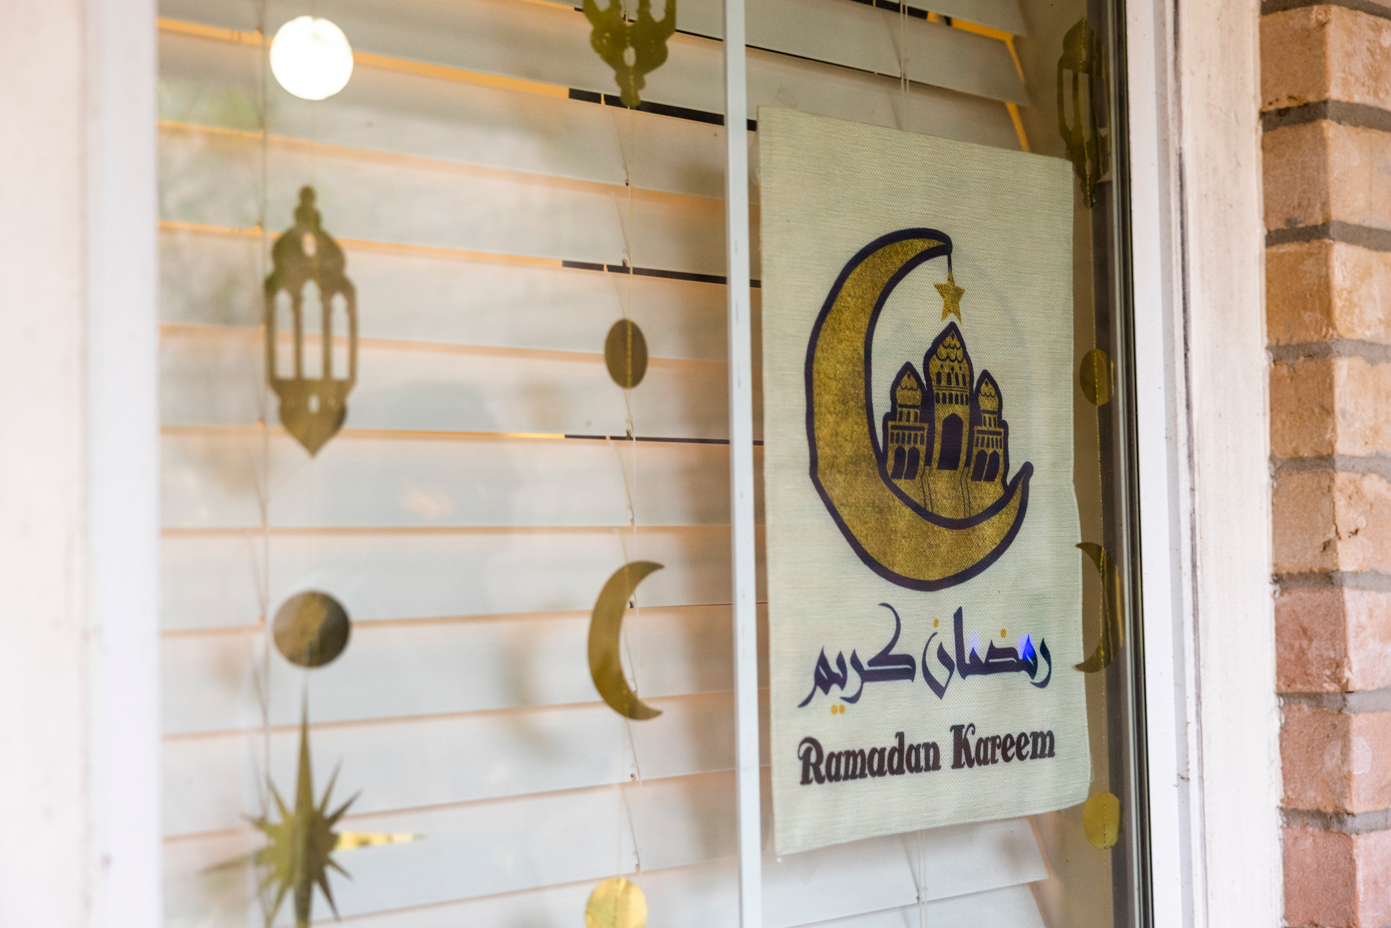 Ramadan Kareem sign on a window